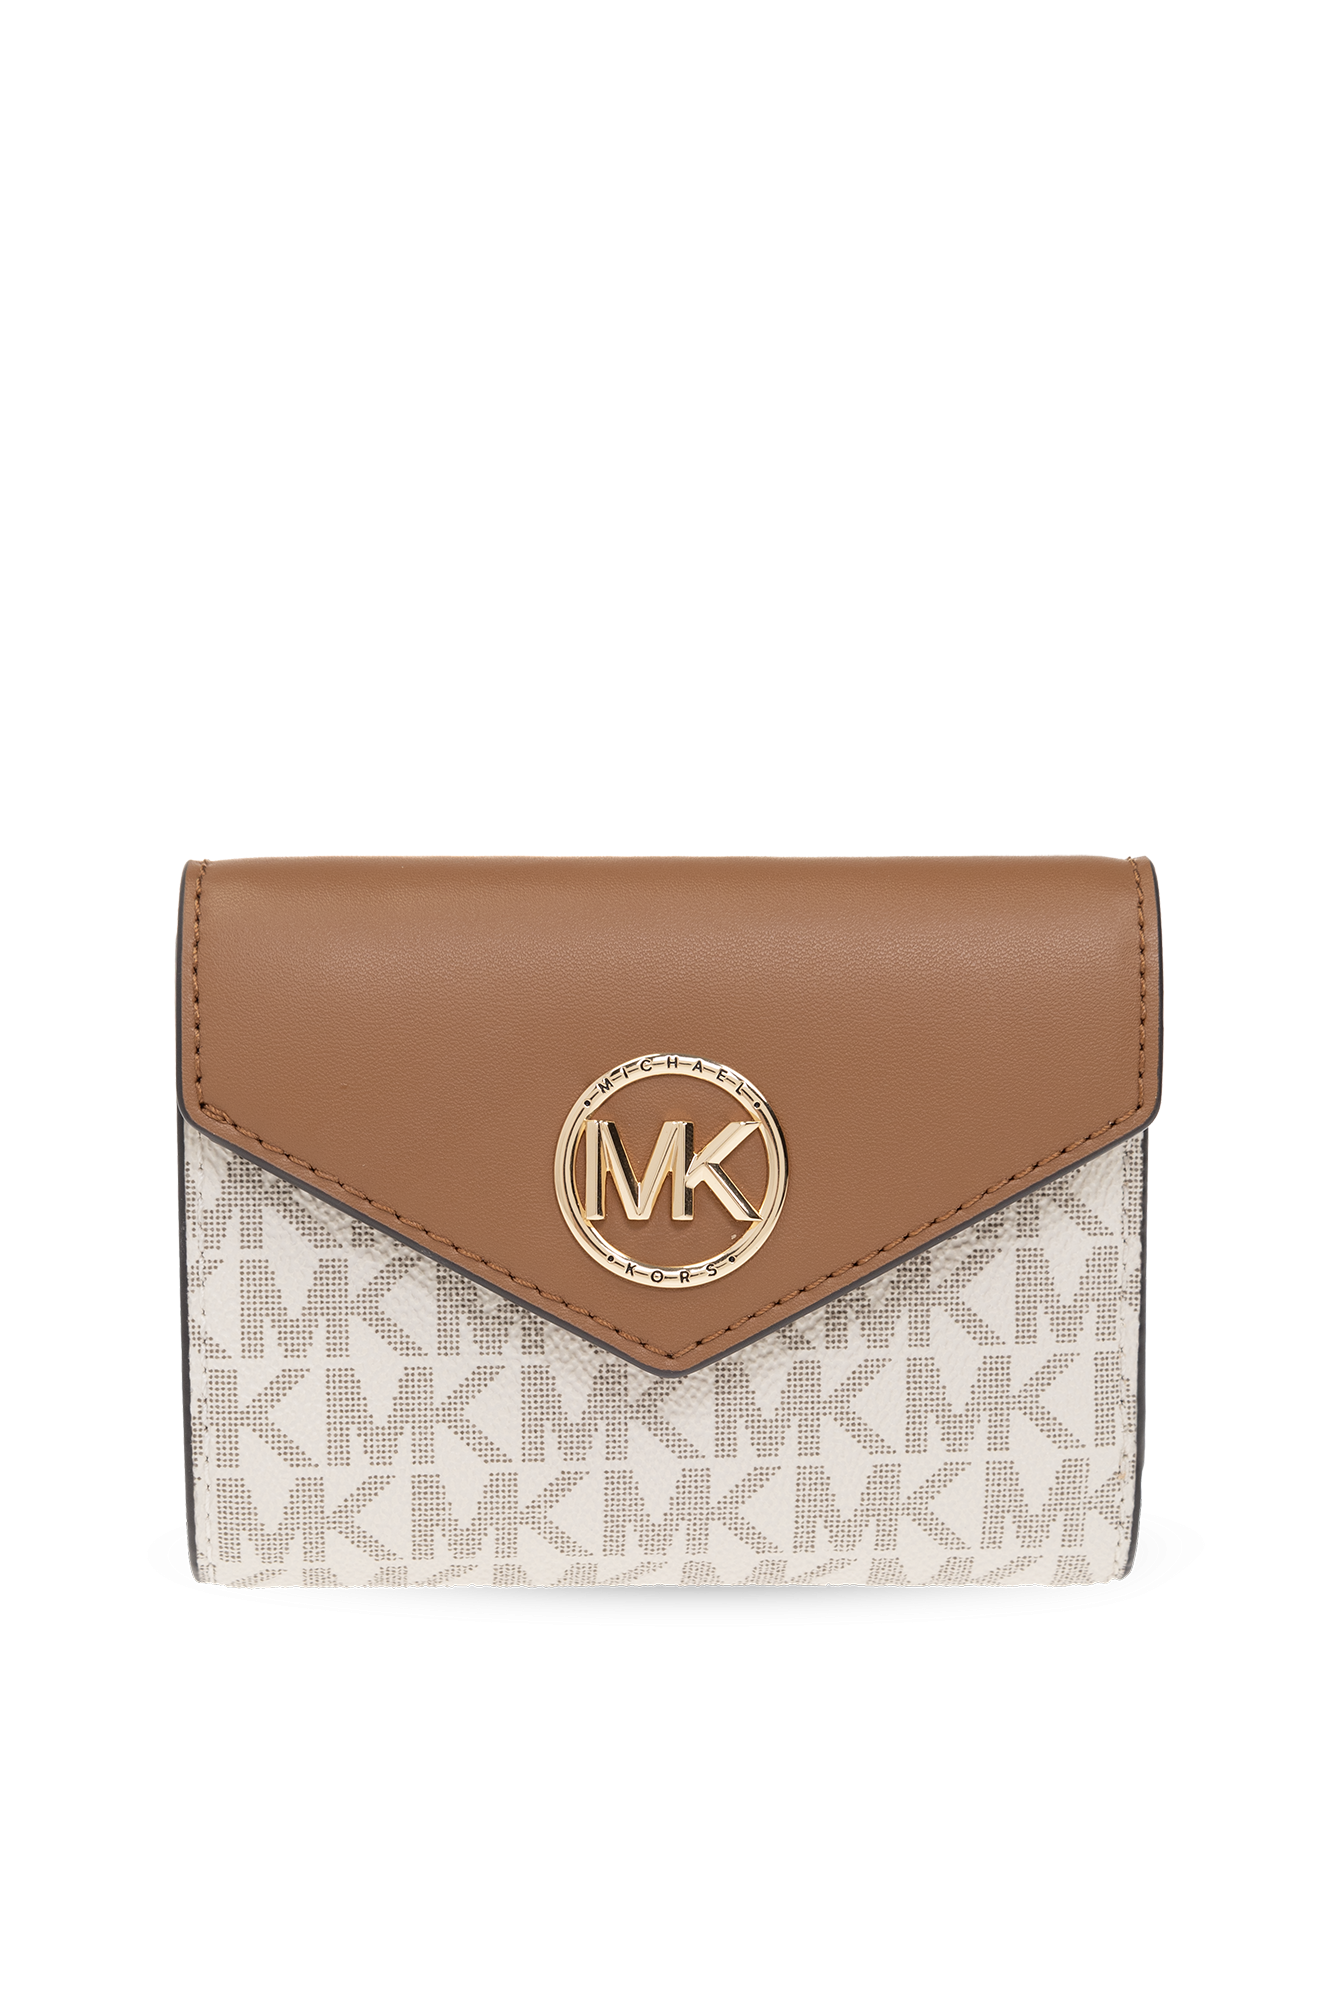 Michael Kors Women's Wallets - Cream